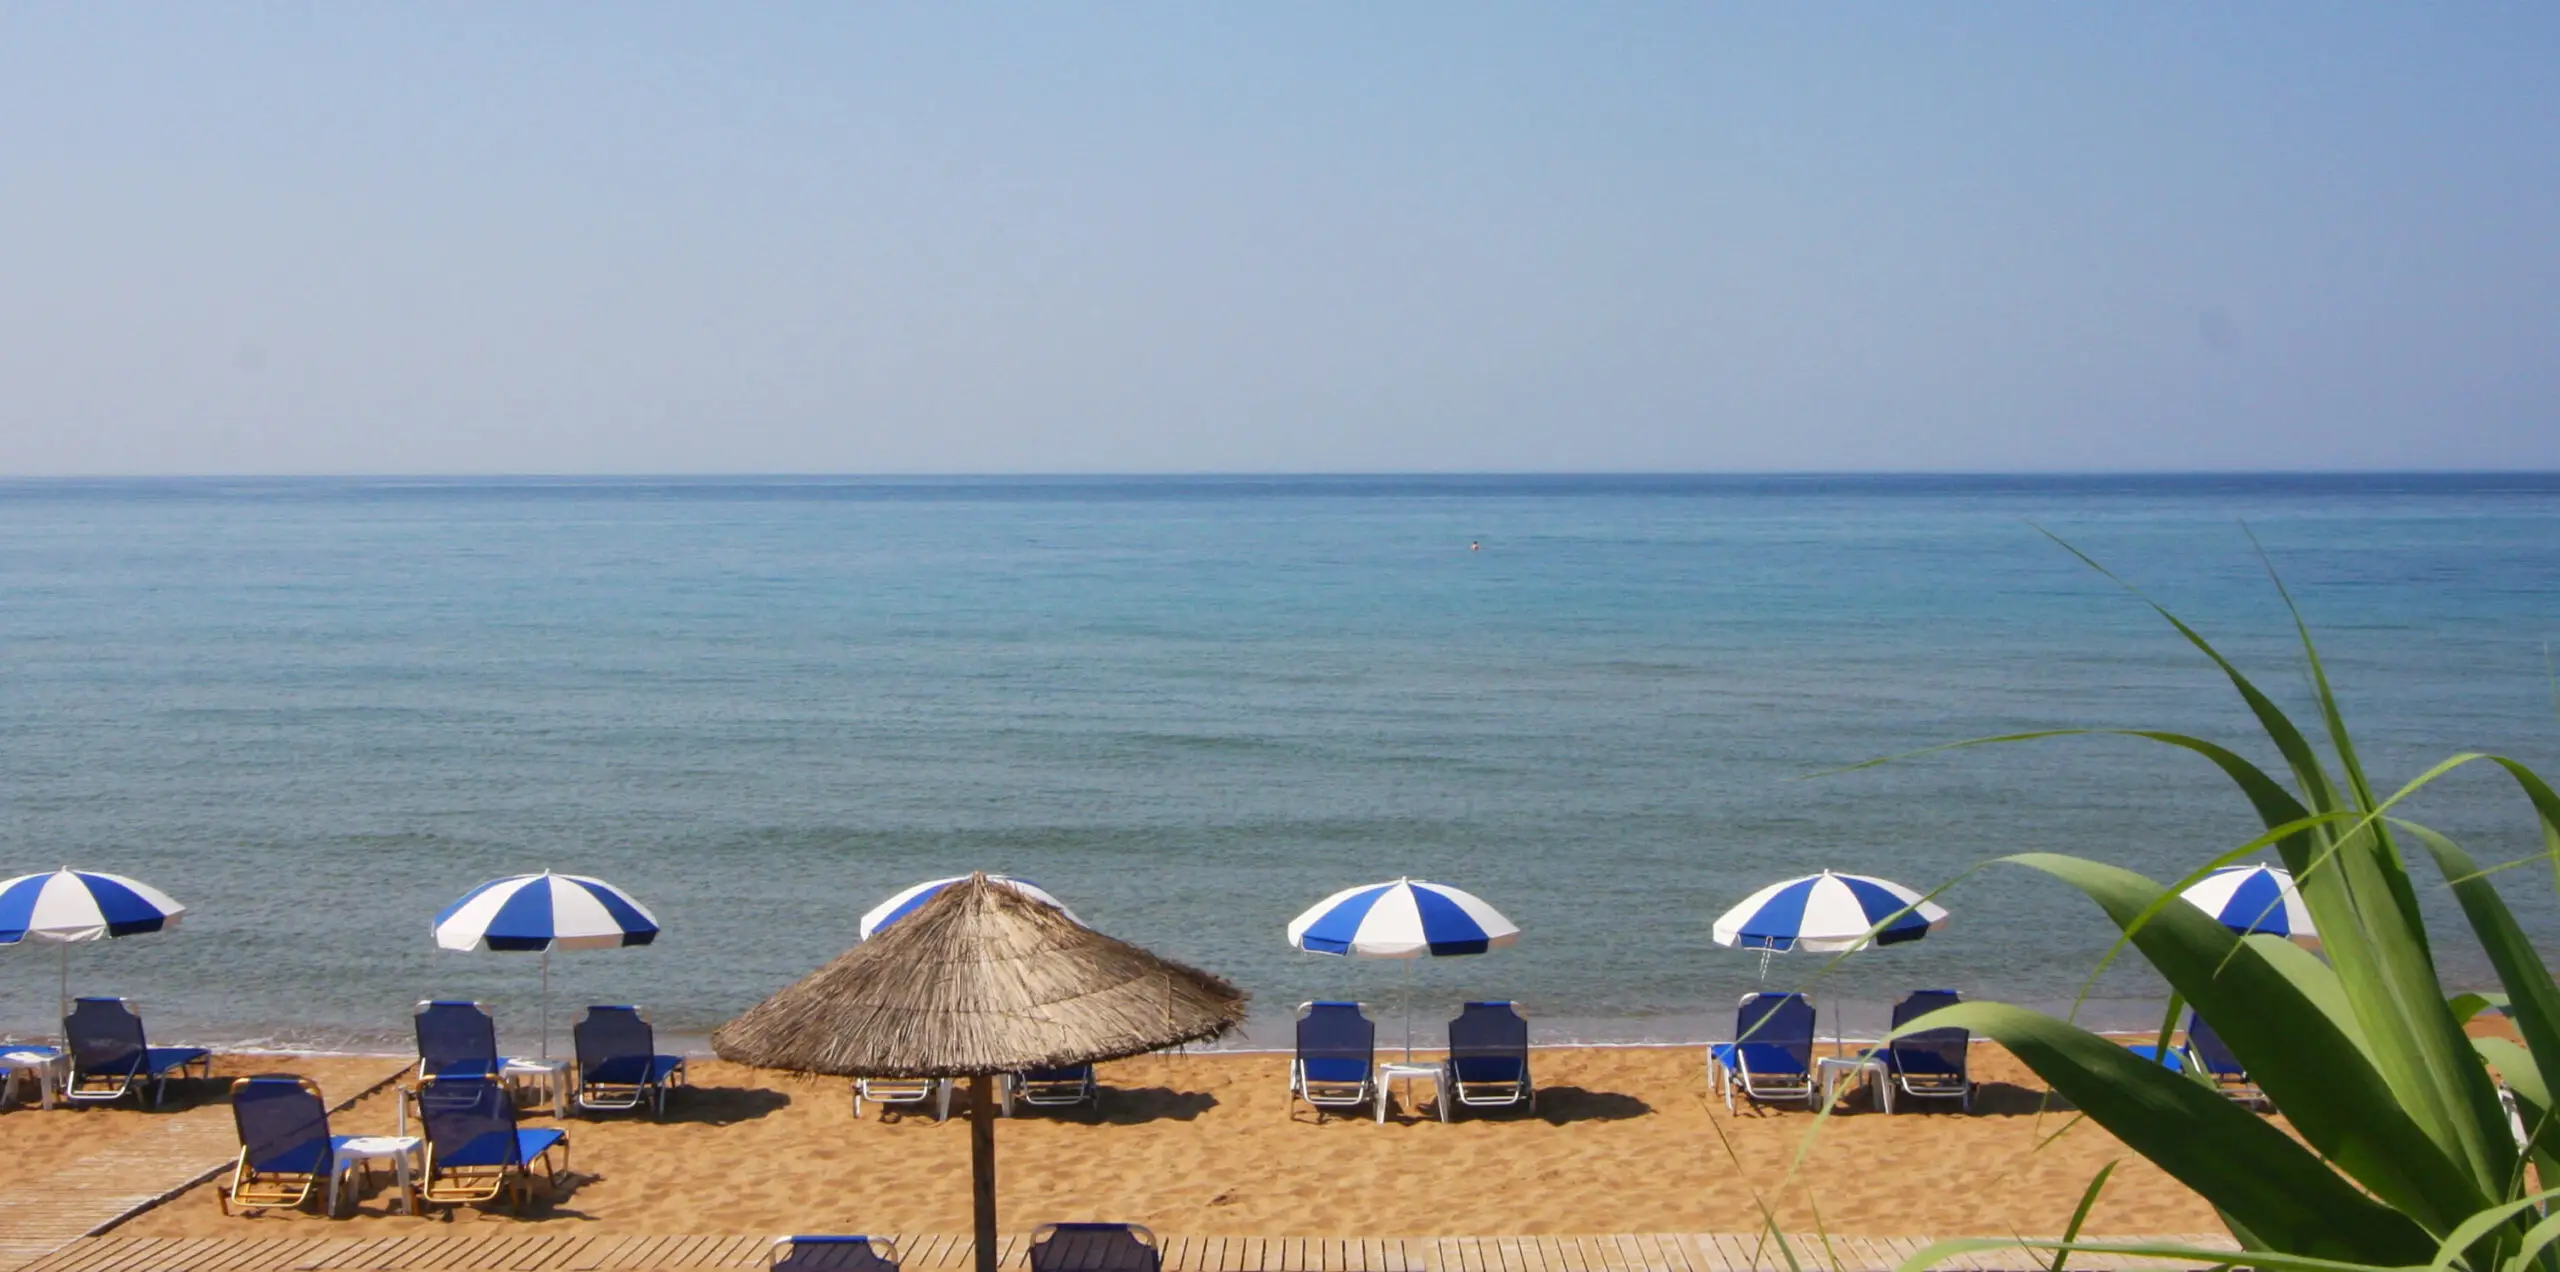 gardenos beach in corfu island